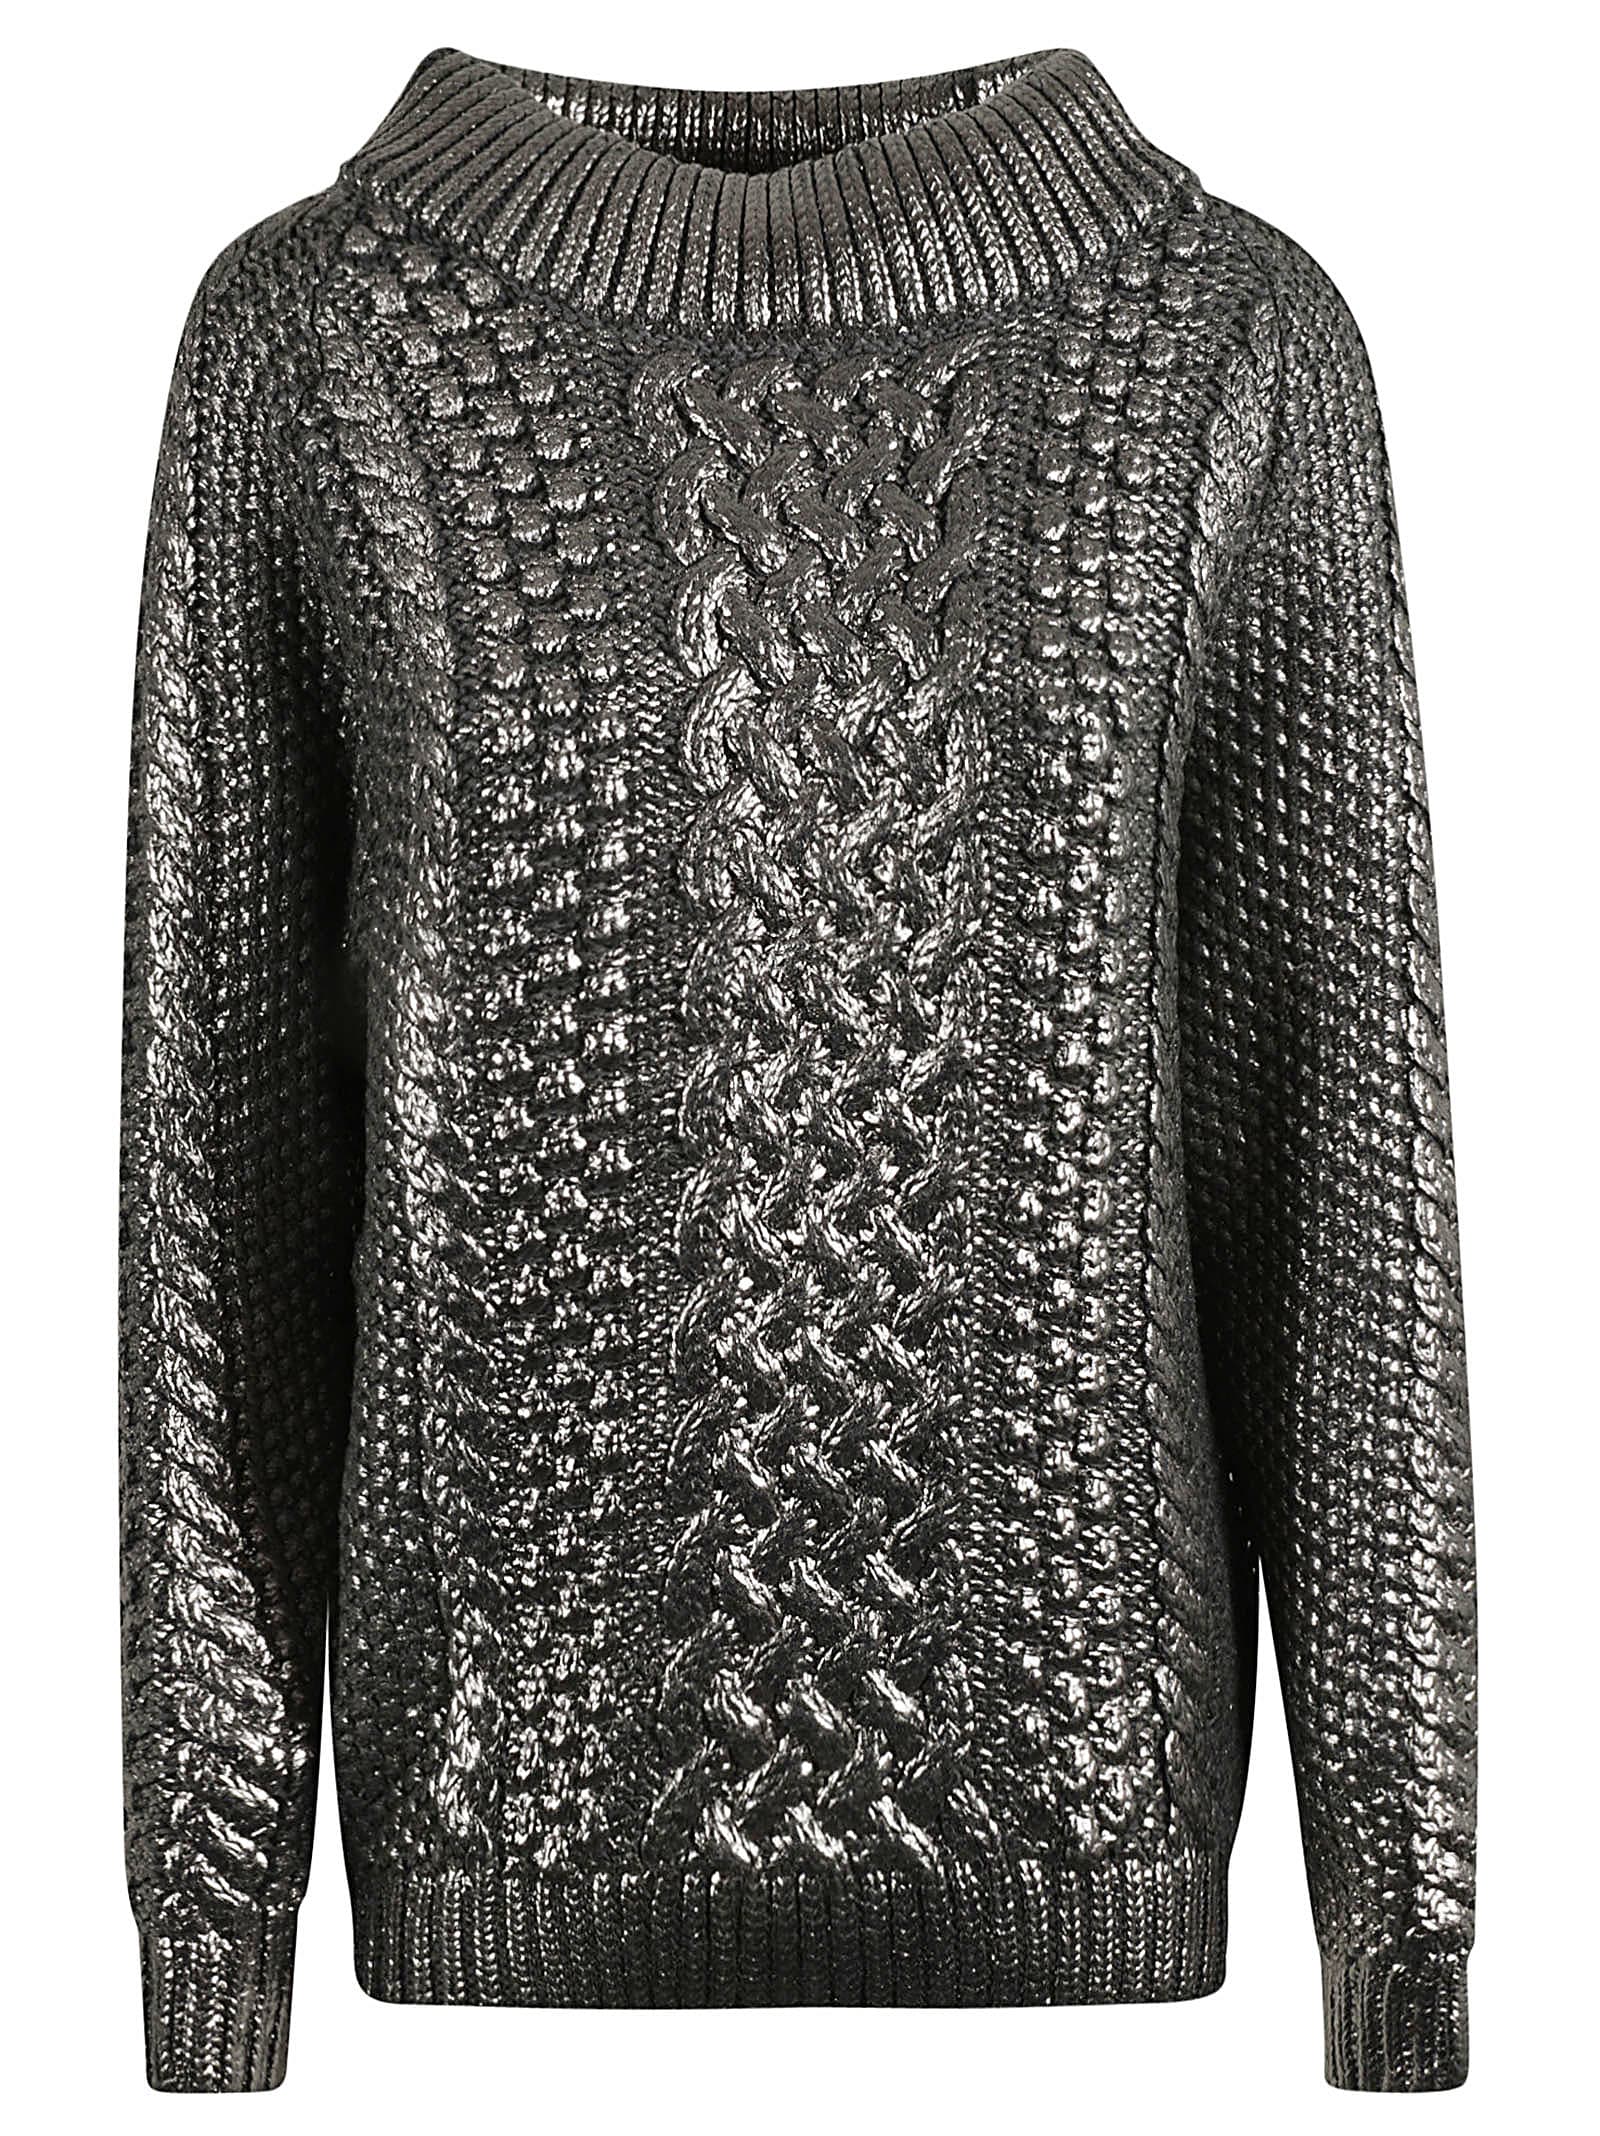 Alberta Ferretti High-neck Patterned Metallic Sweater